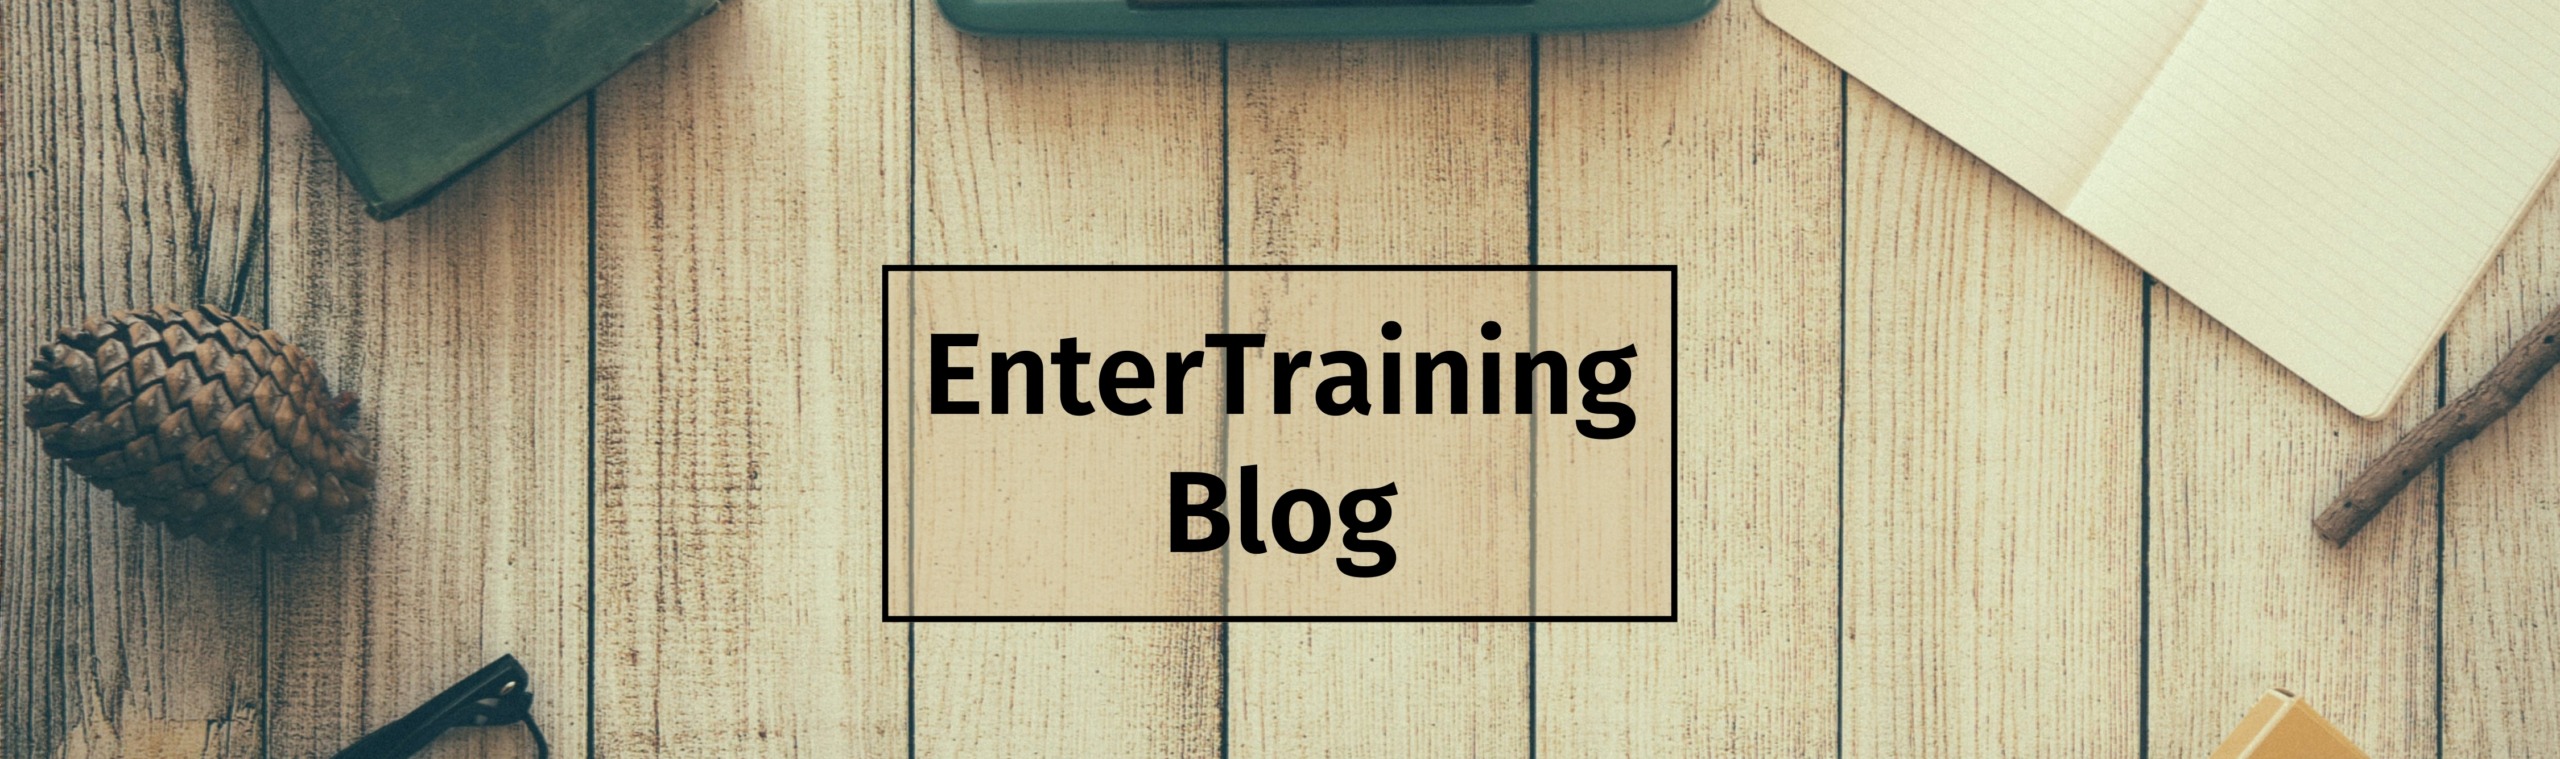 EnterTraining Blog